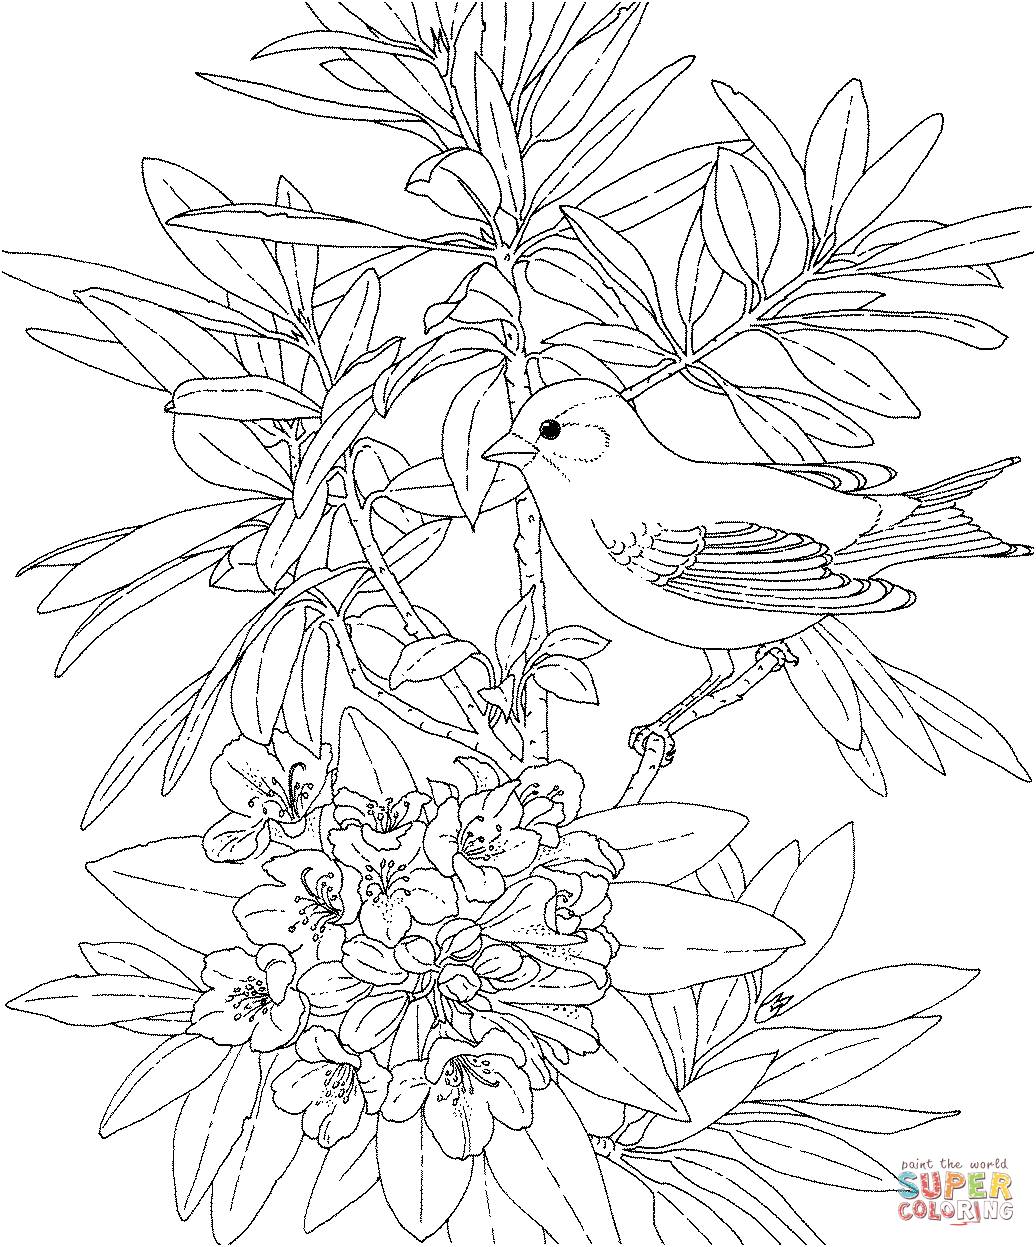 Washington Willow Chardonneret et Rhododendron d'Azalée